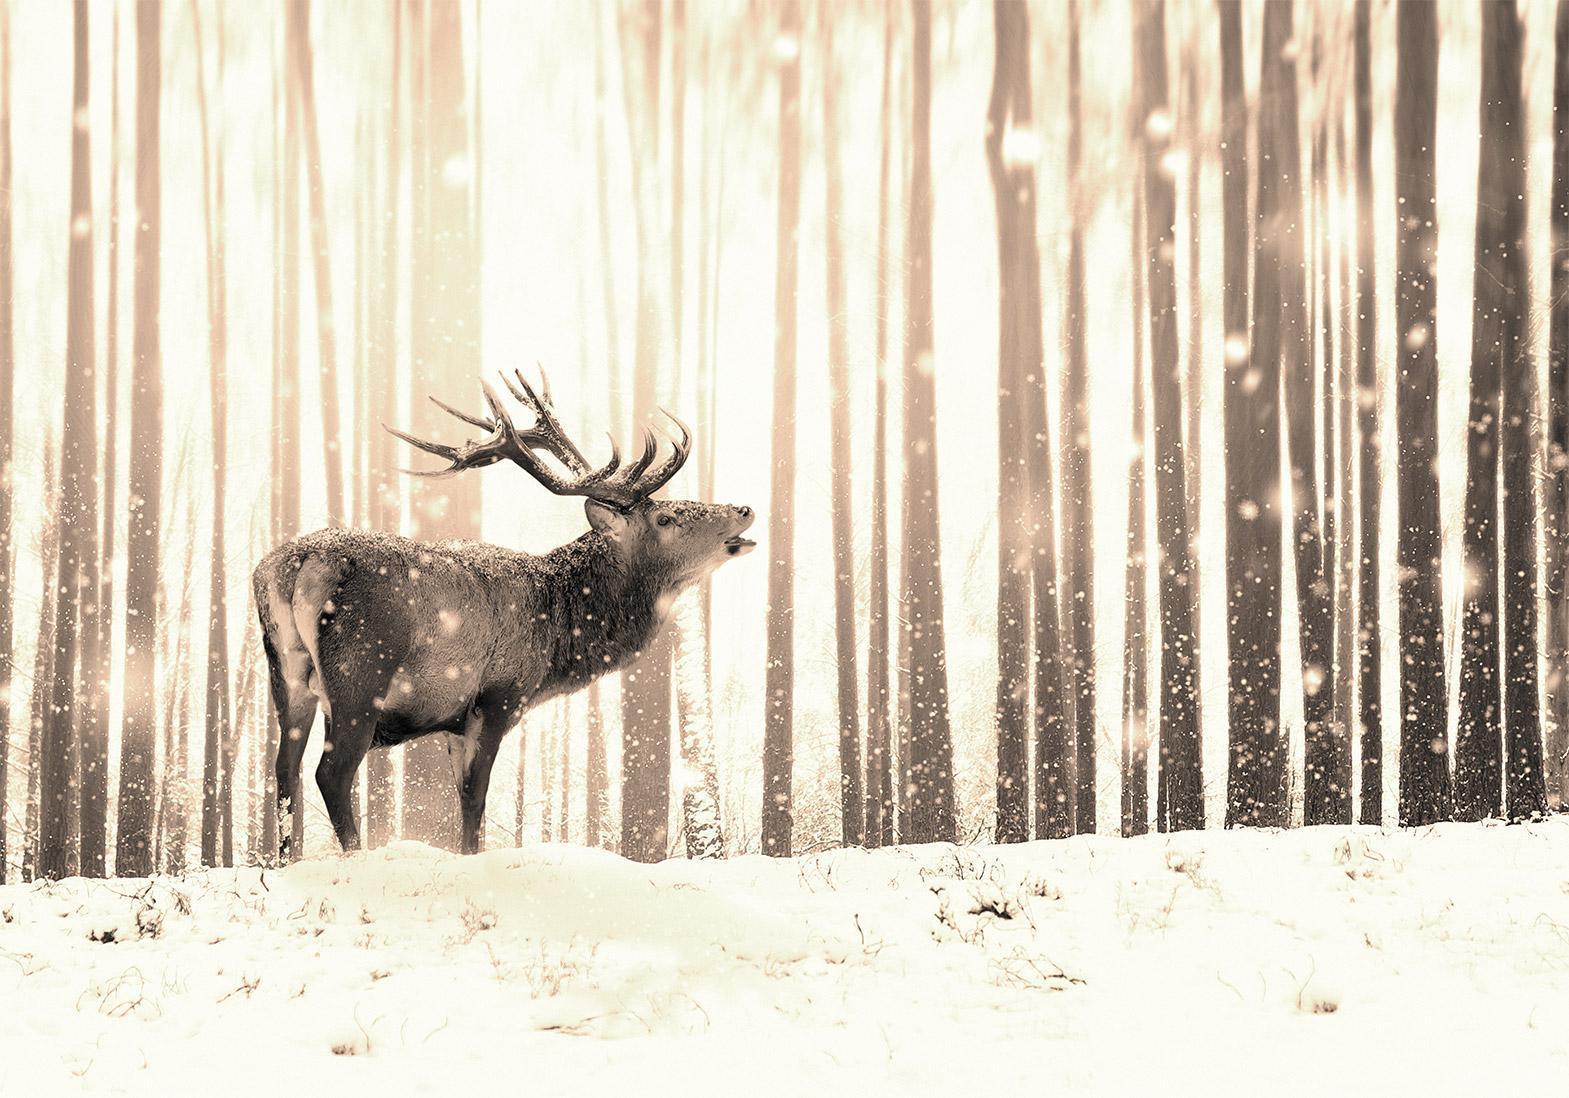 Papier peint - Deer in the Snow (Sepia)